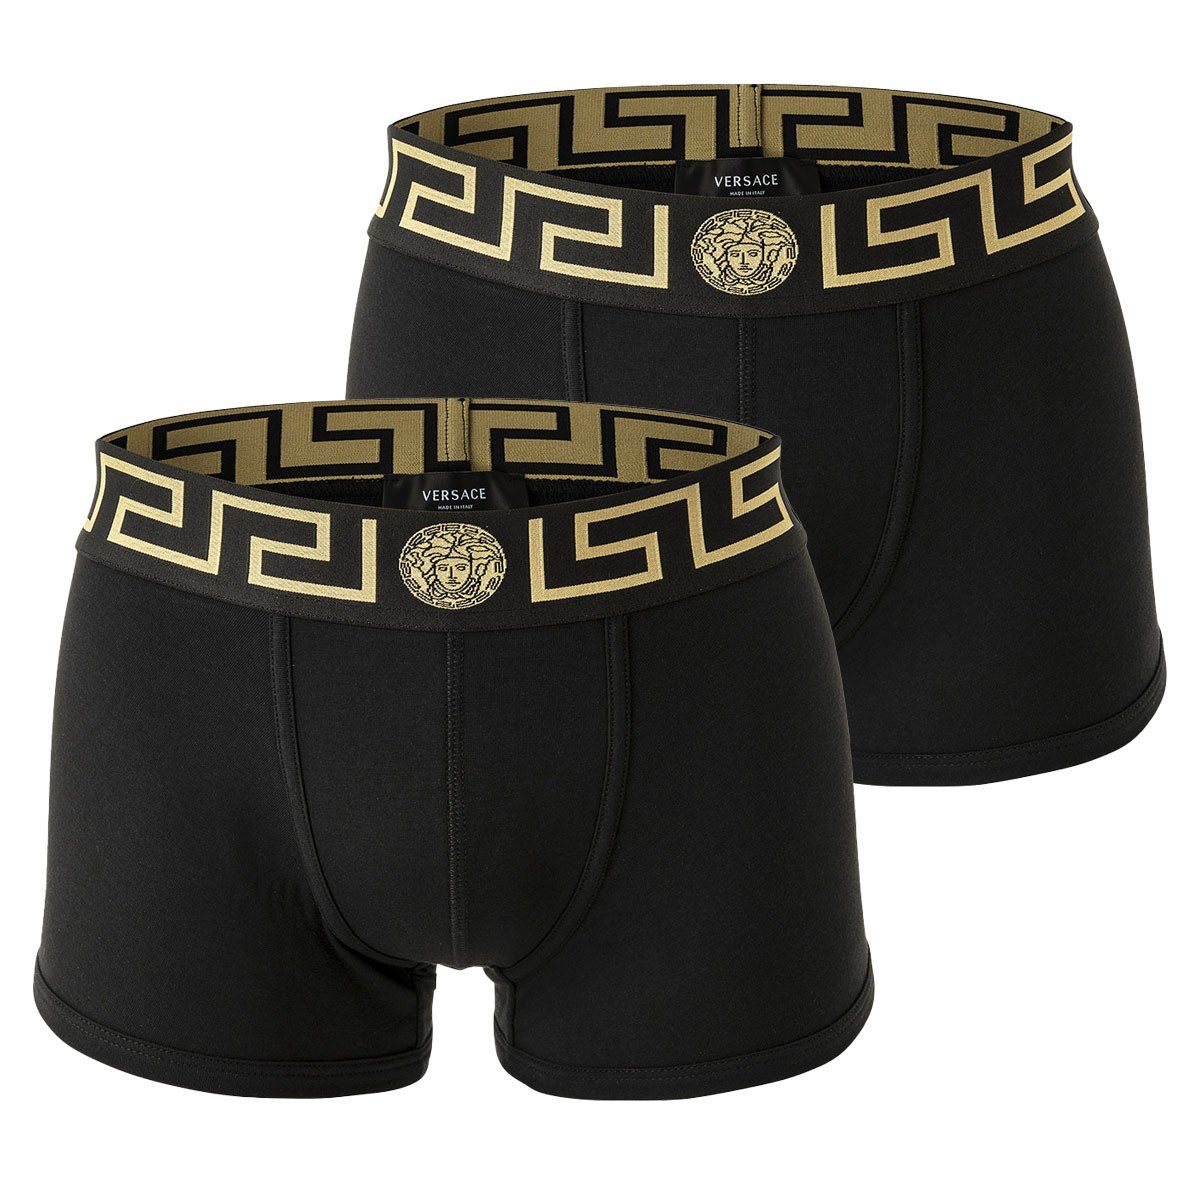 Versace Boxer Herren Boxer Shorts, 2er Pack - Trunk Schwarz/Gold